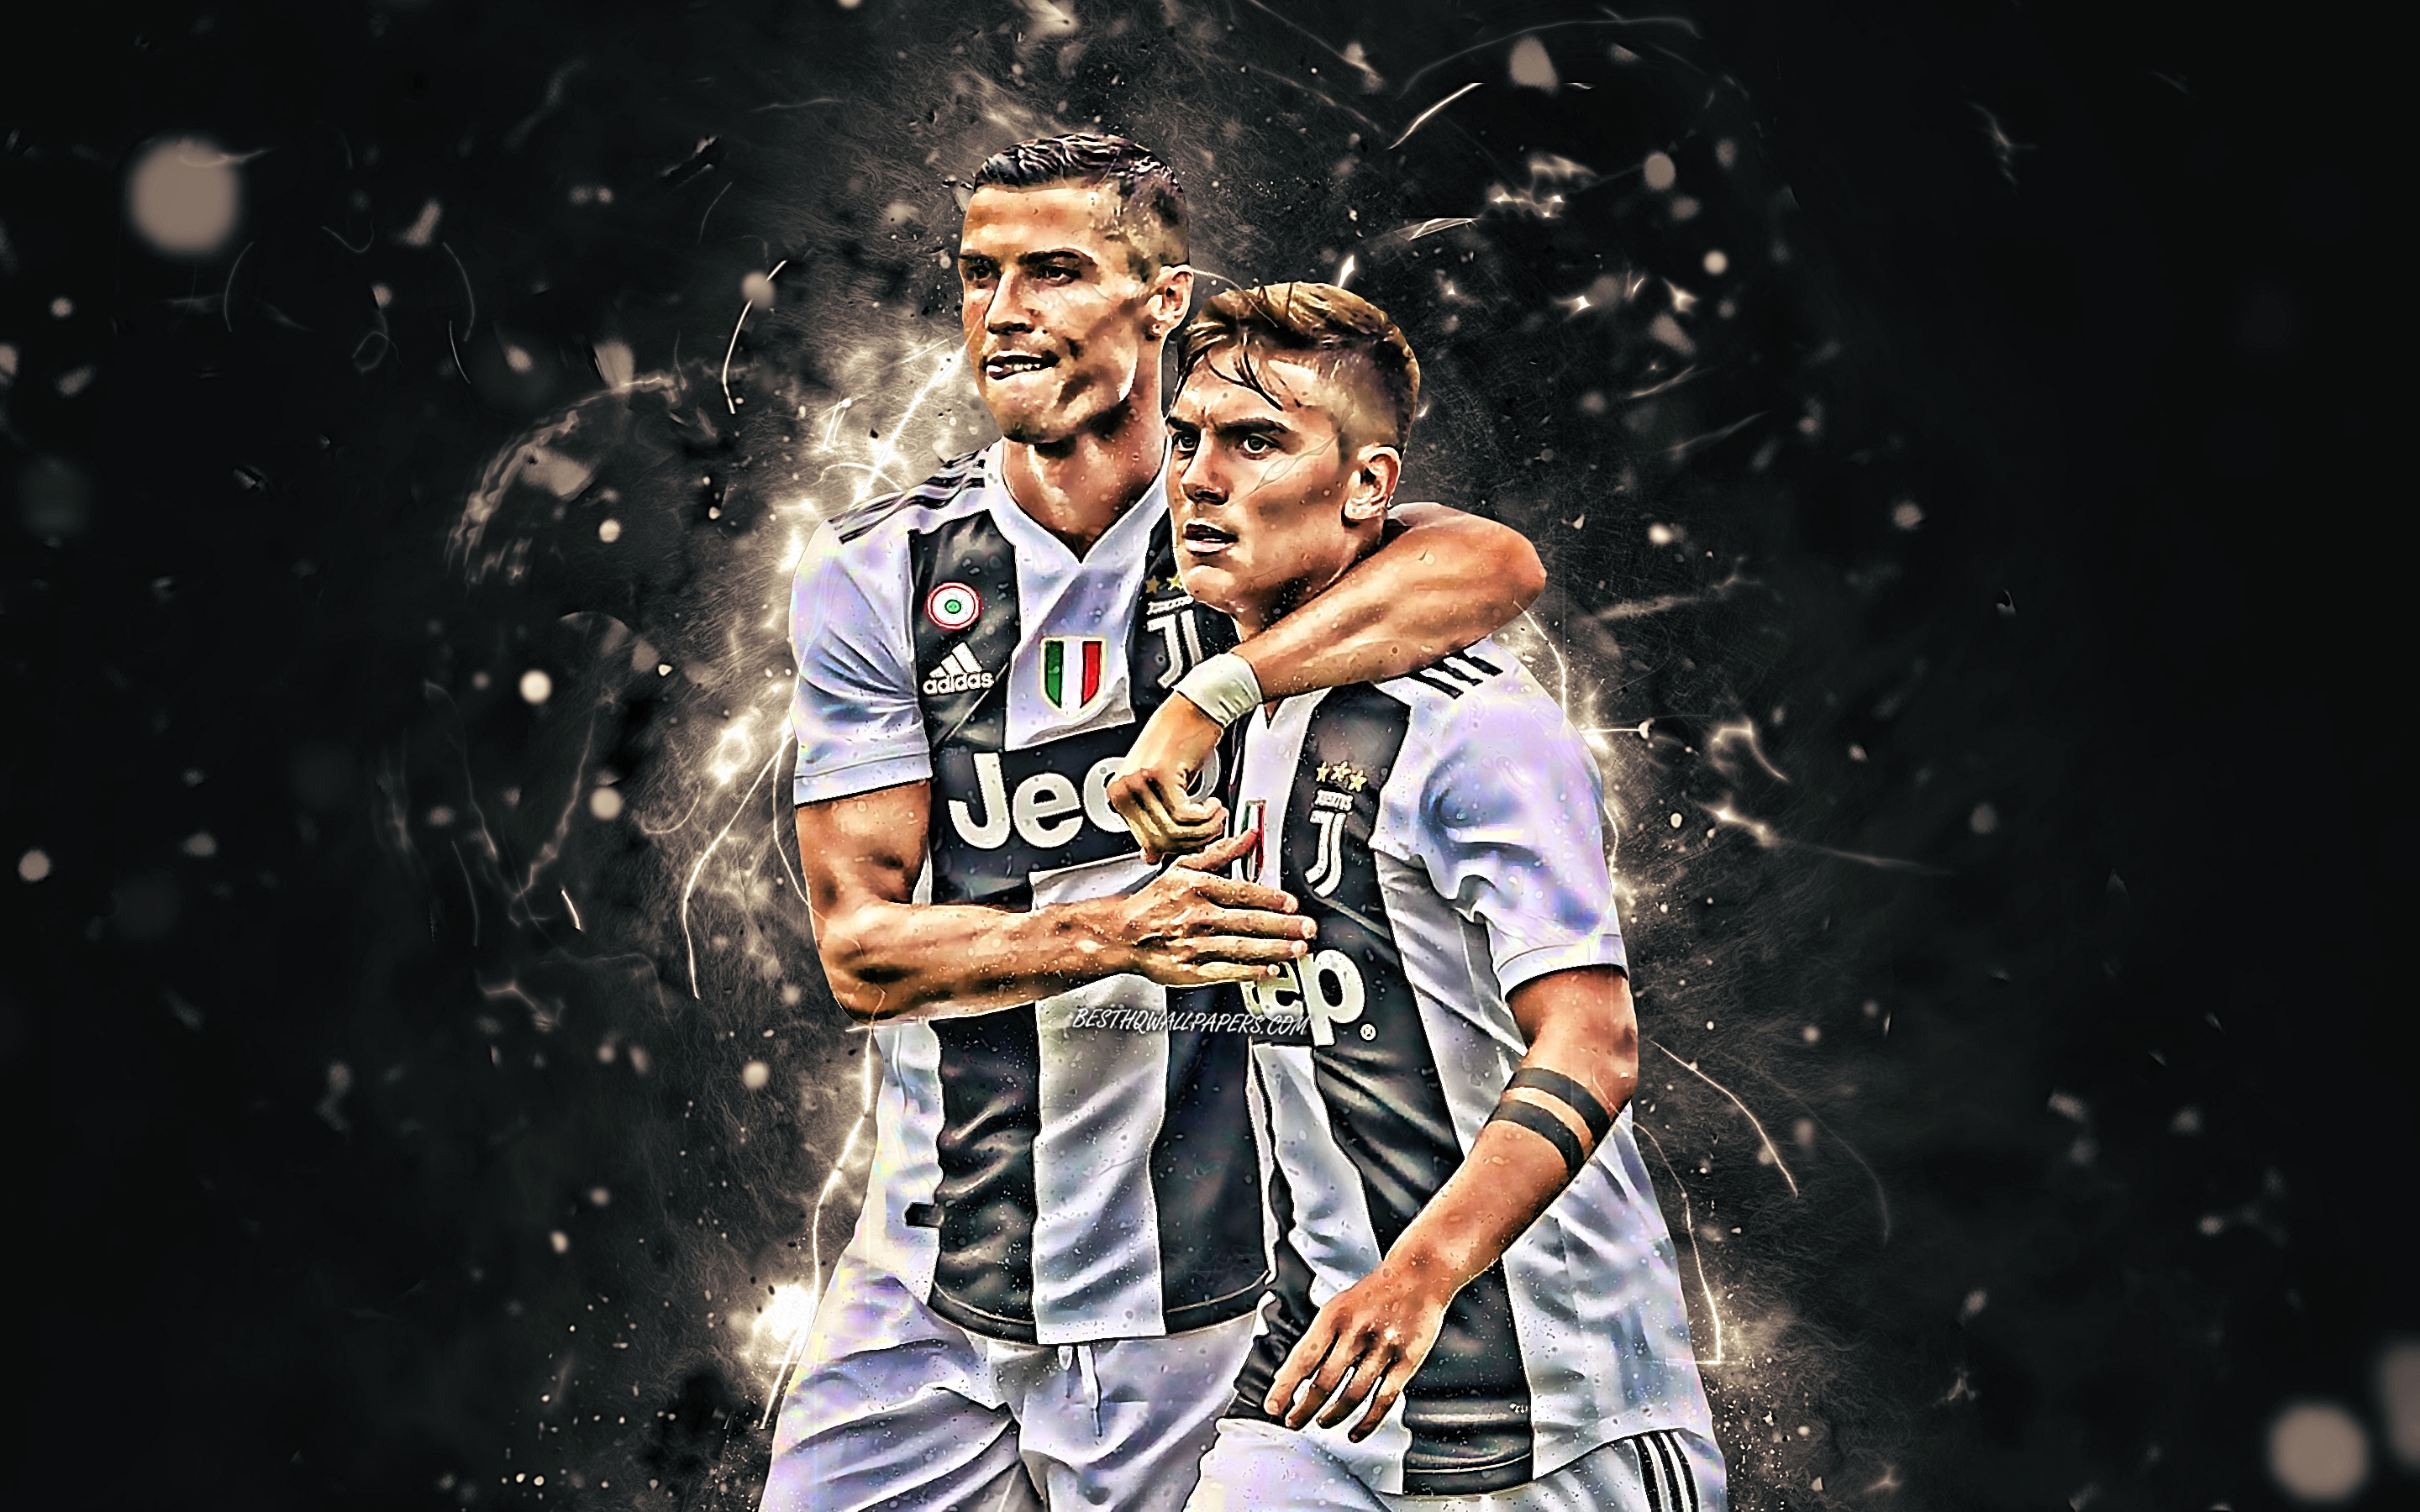 Download wallpaper Ronaldo and Dybala, Juve, football stars